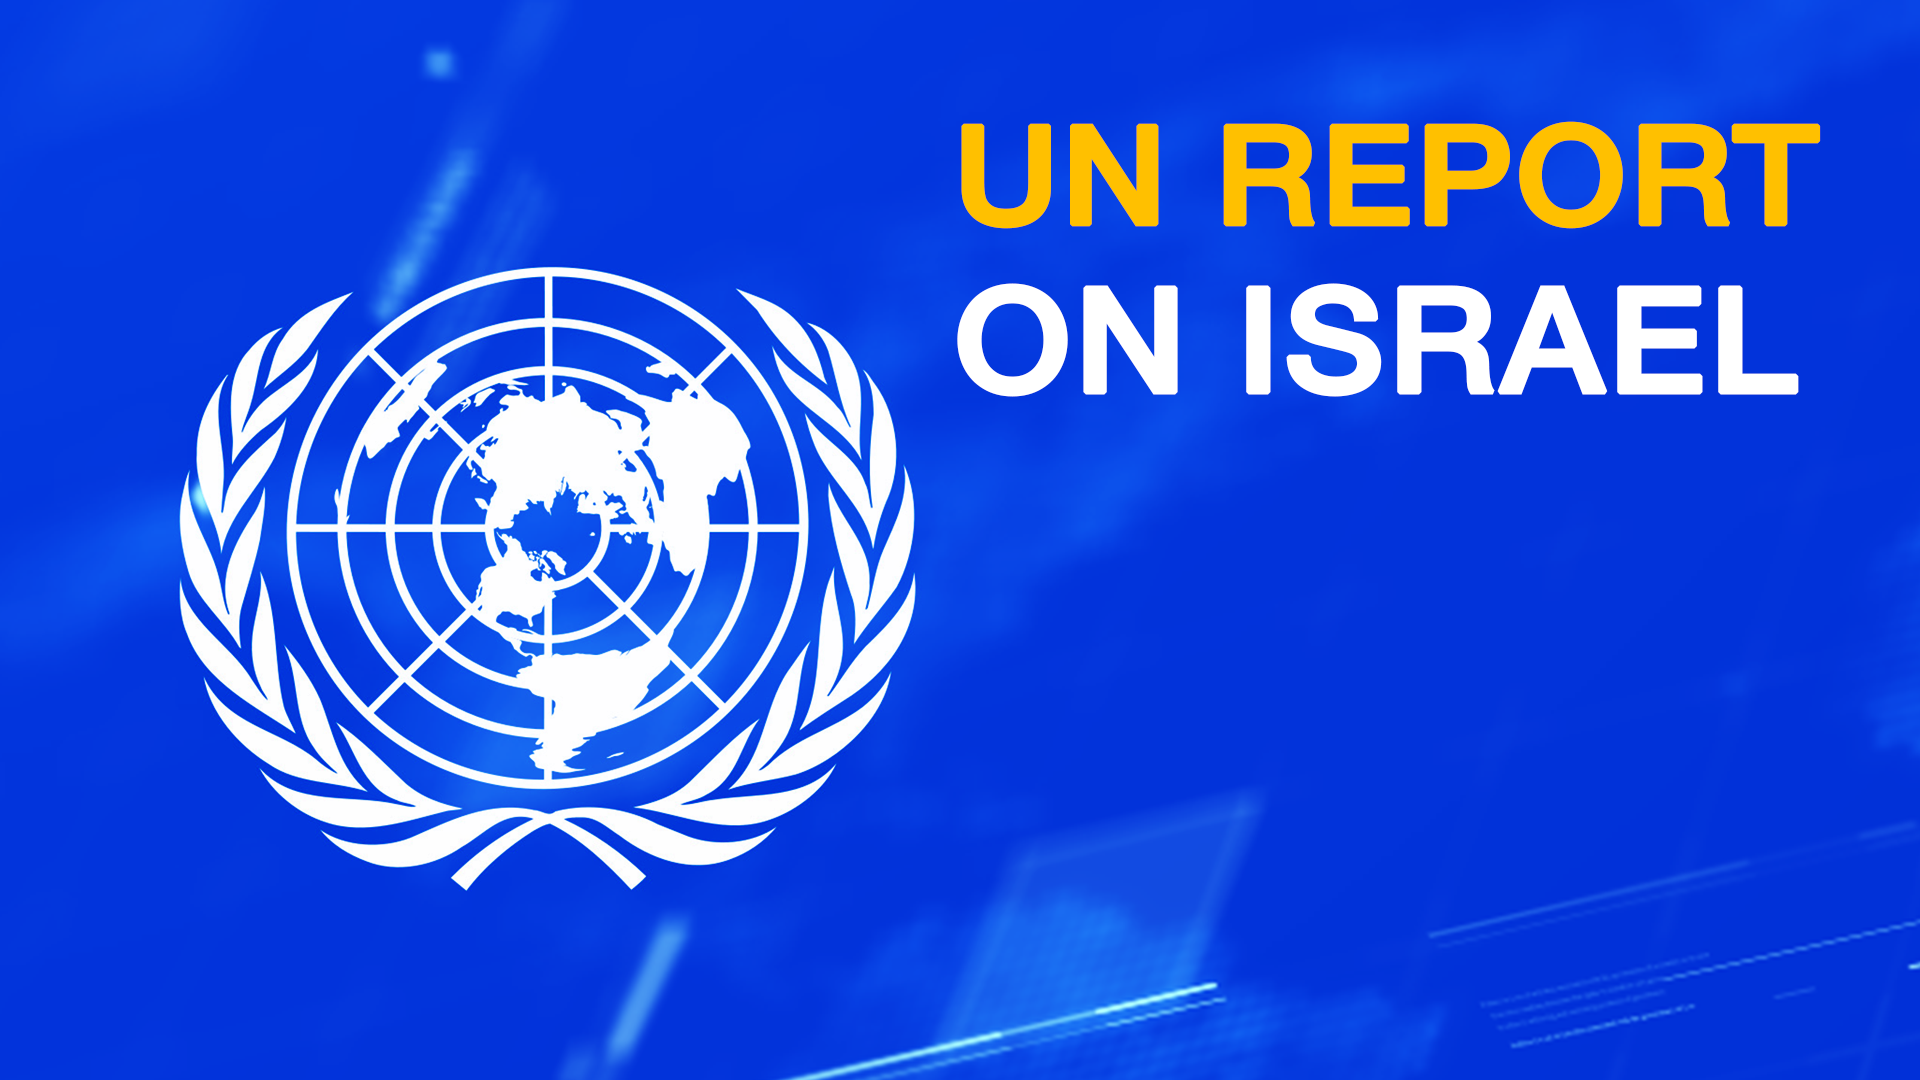 UN Report on Israel